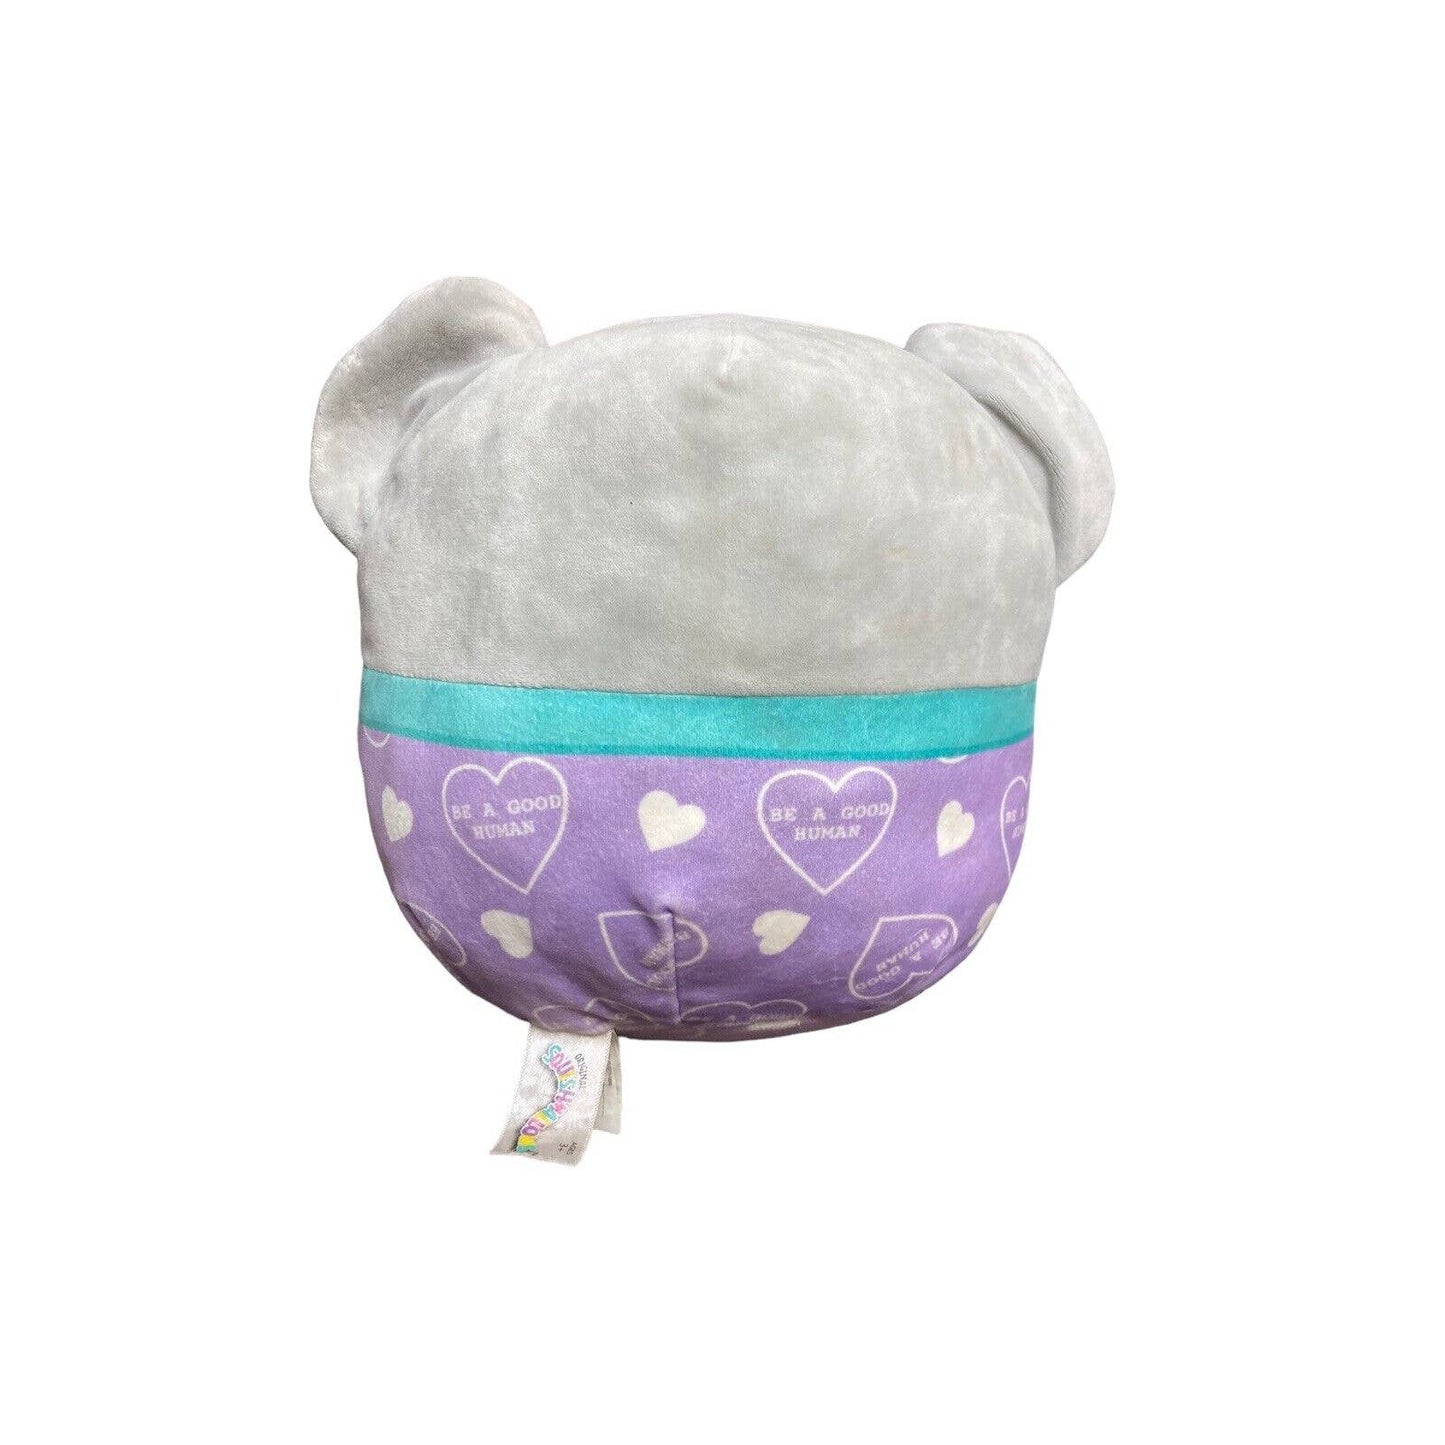 Squishmallow Kirk the Koala in Pajamas 8” Kellytoy Soft Plush Stuffed Pet Toy